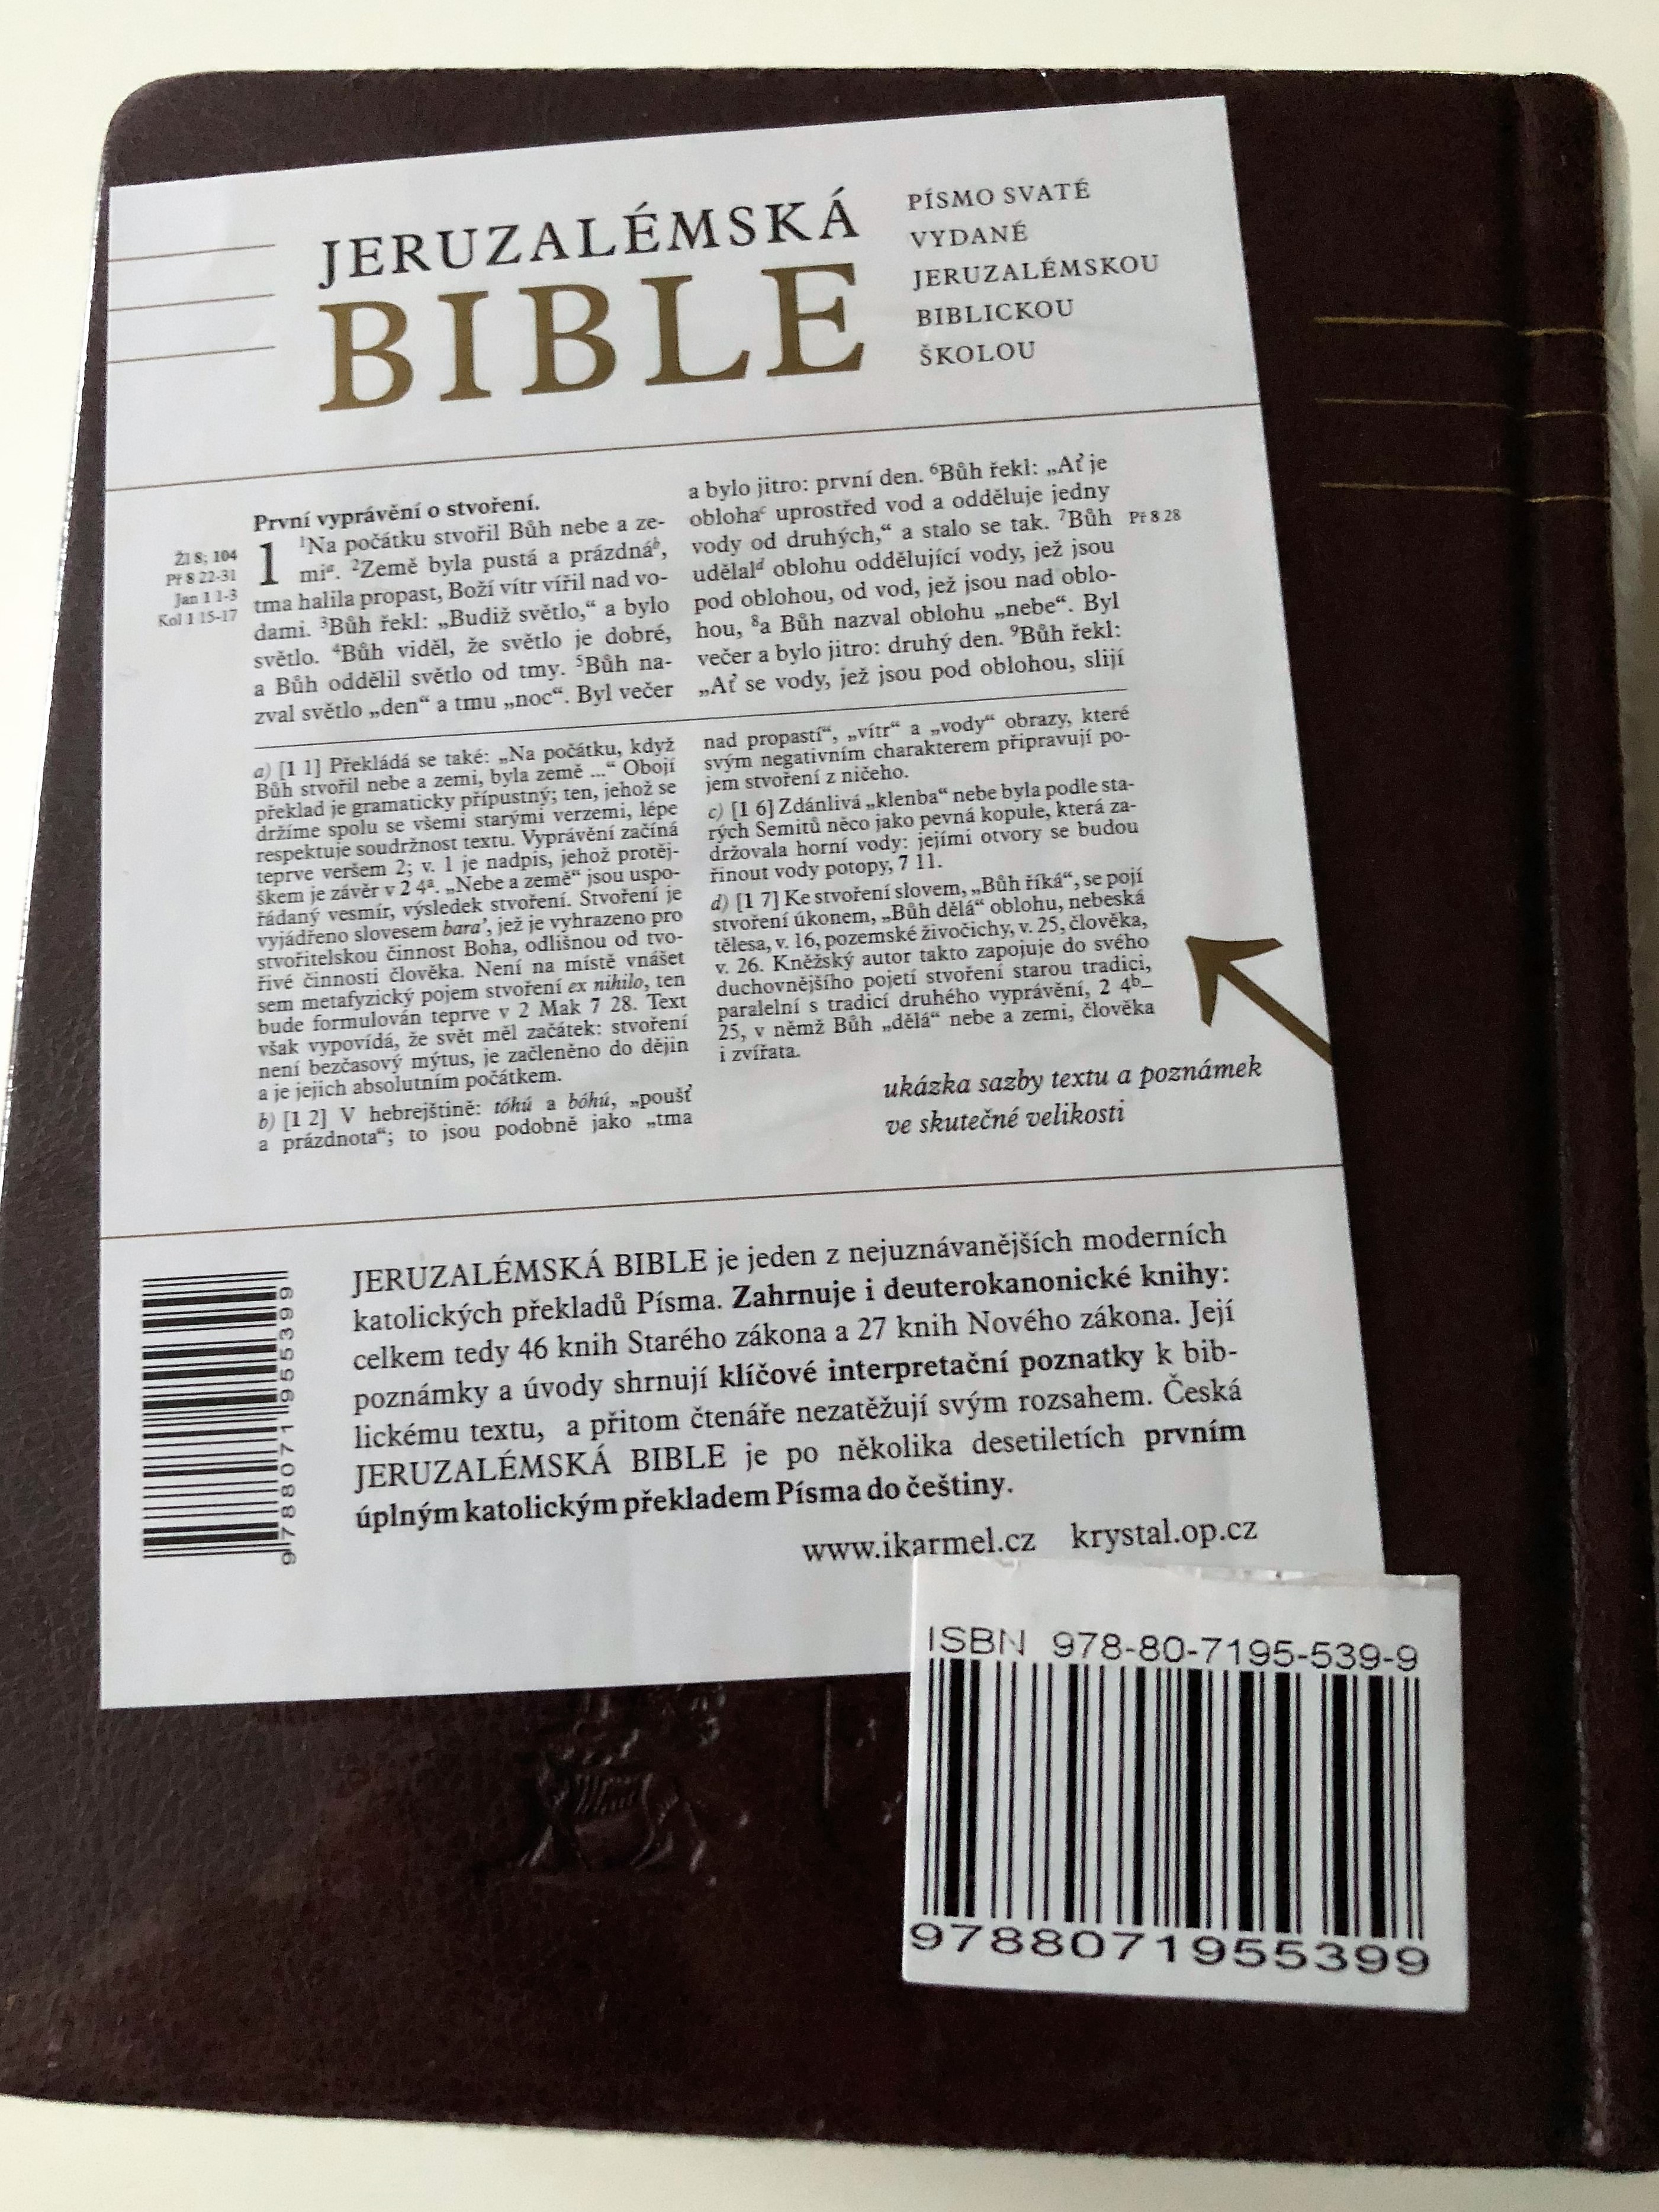 jeruzal-msk-bible-jerusalem-bible-in-czech-language-p-smo-svat-vydan-jeruzal-mskou-biblickou-kolou-brown-leather-bound-with-golden-edges-thumb-index-contains-deuterocanonical-books-catholic-version-5-.jpg